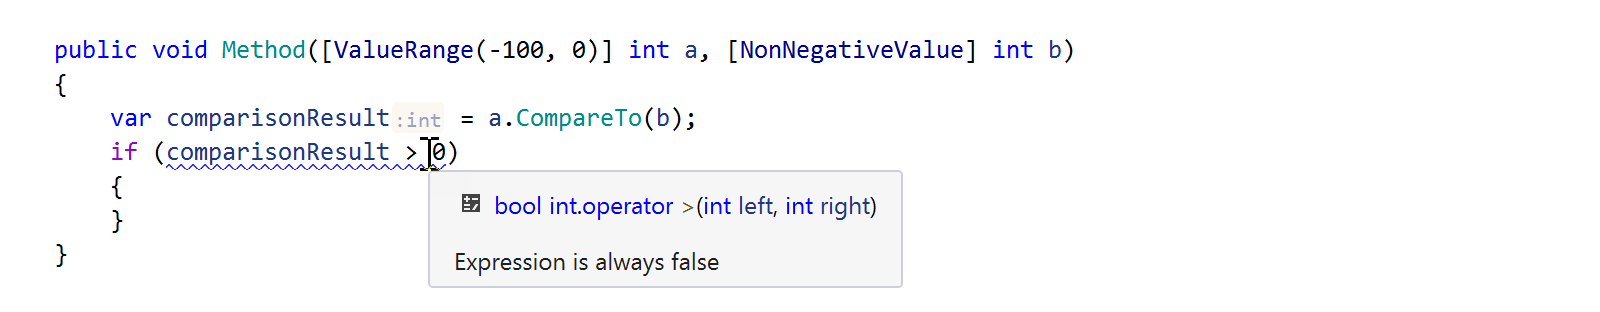 Dataflow analysis of integer values in C#